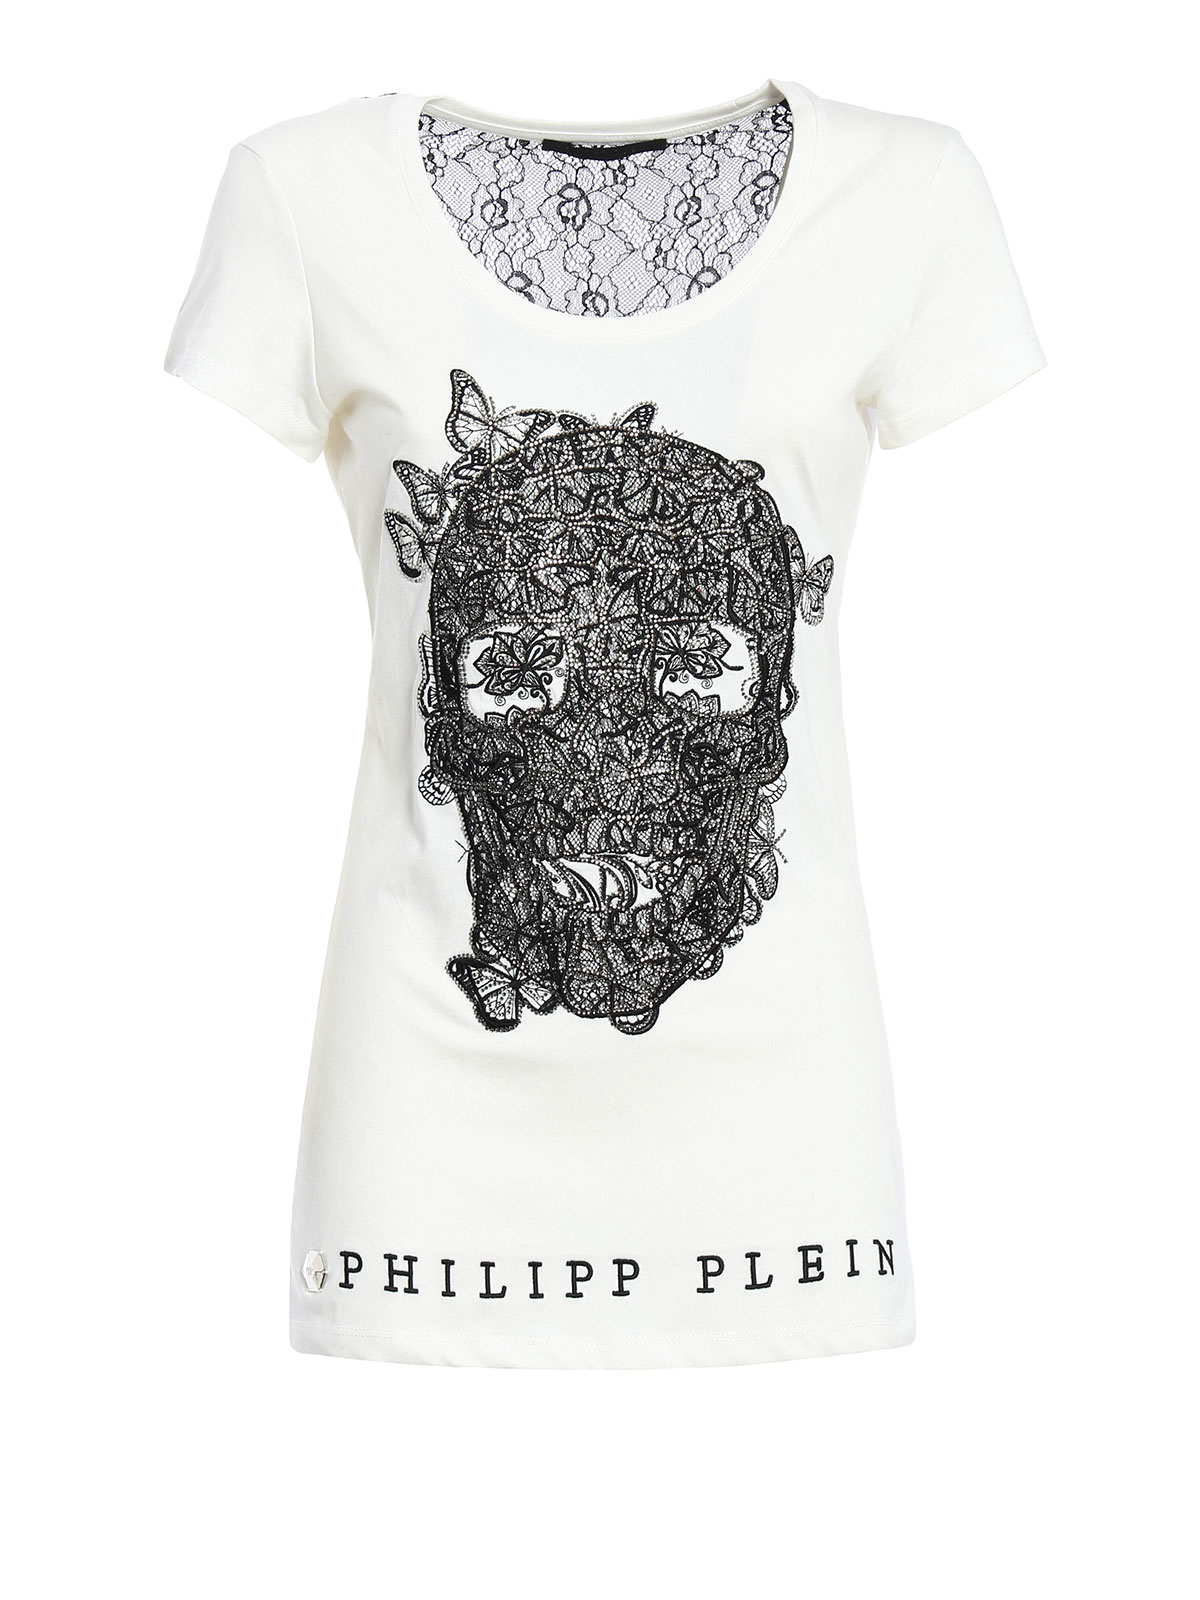 Philipp Plein - T-Shirt Fur Damen - Weiß - CW34094601